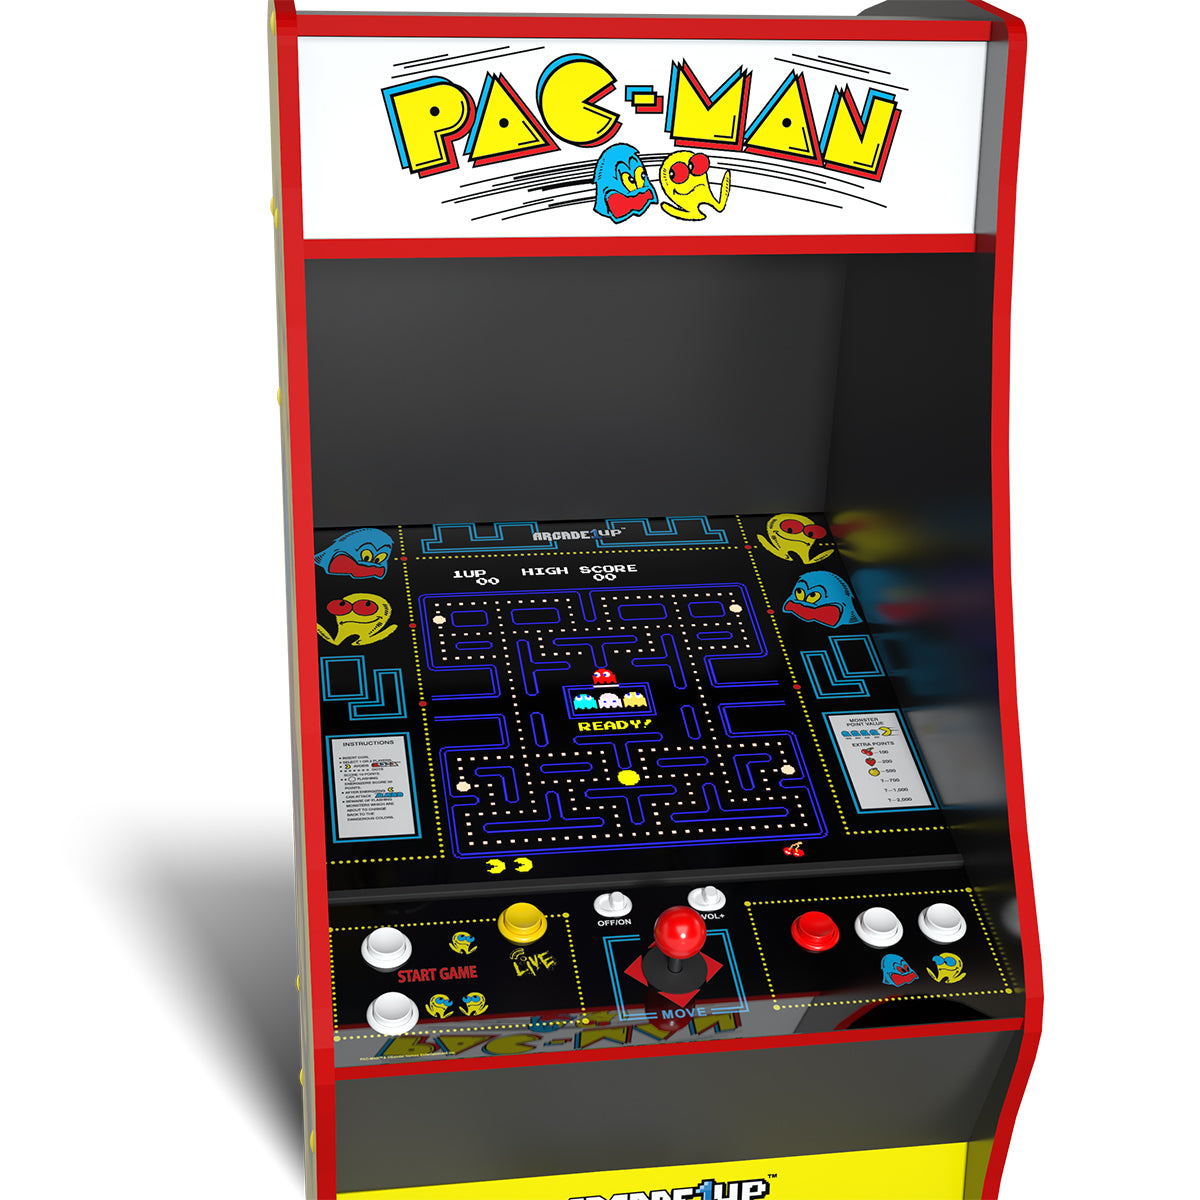 Arcade1up NEW PAC-MAN ARCADE RISERLESS